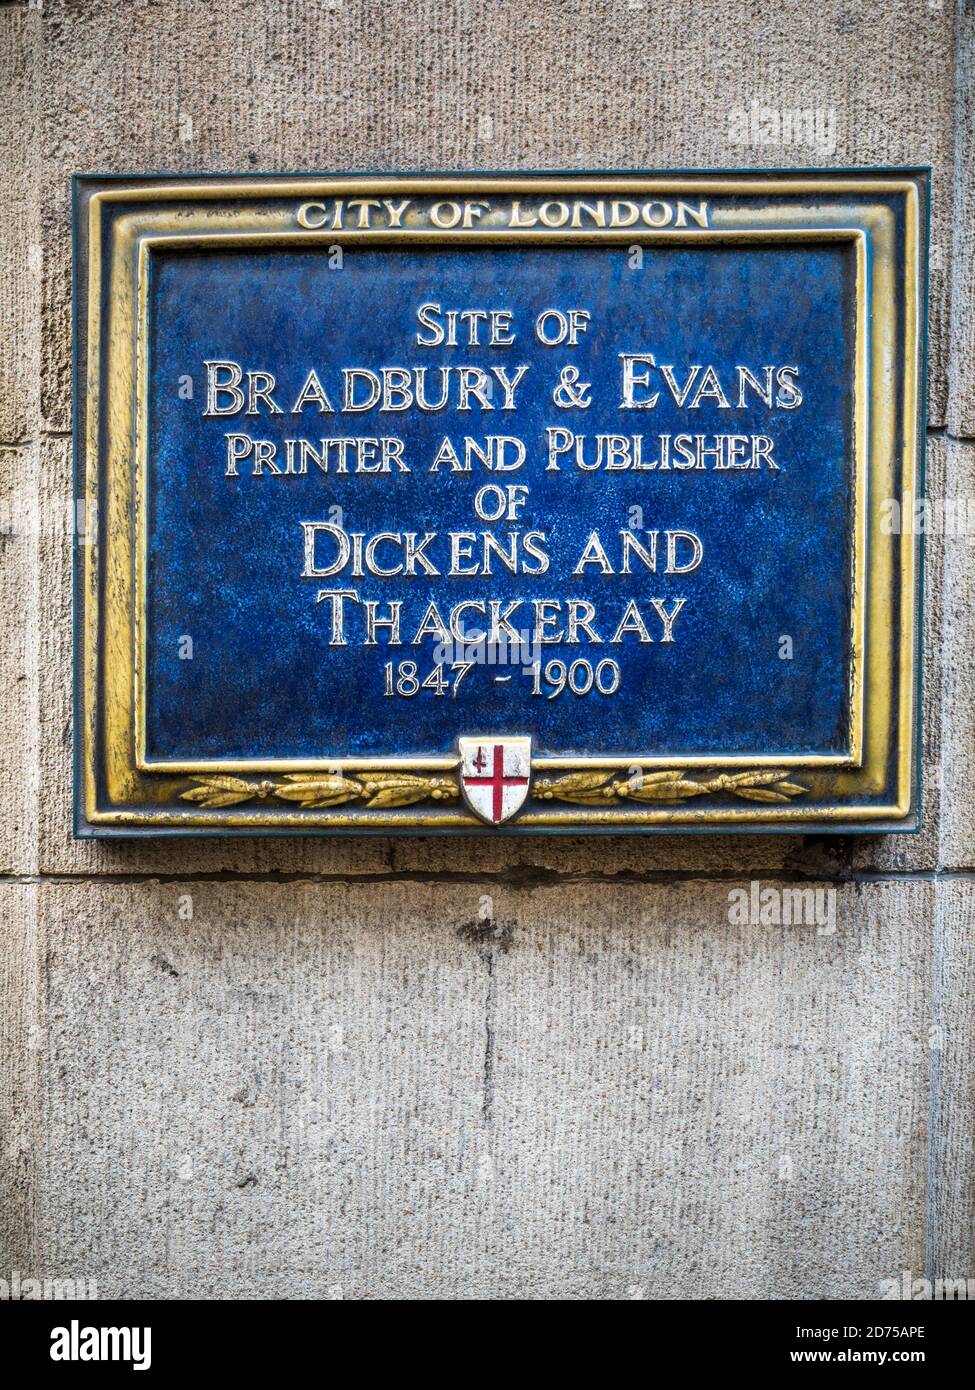 Bradbury & Evans Printer and Publisher of Dickens and Thackeray - City of London Blue Plaque marks location of Bradbury & Evans 1847-1900 on Fleet St. Stock Photo